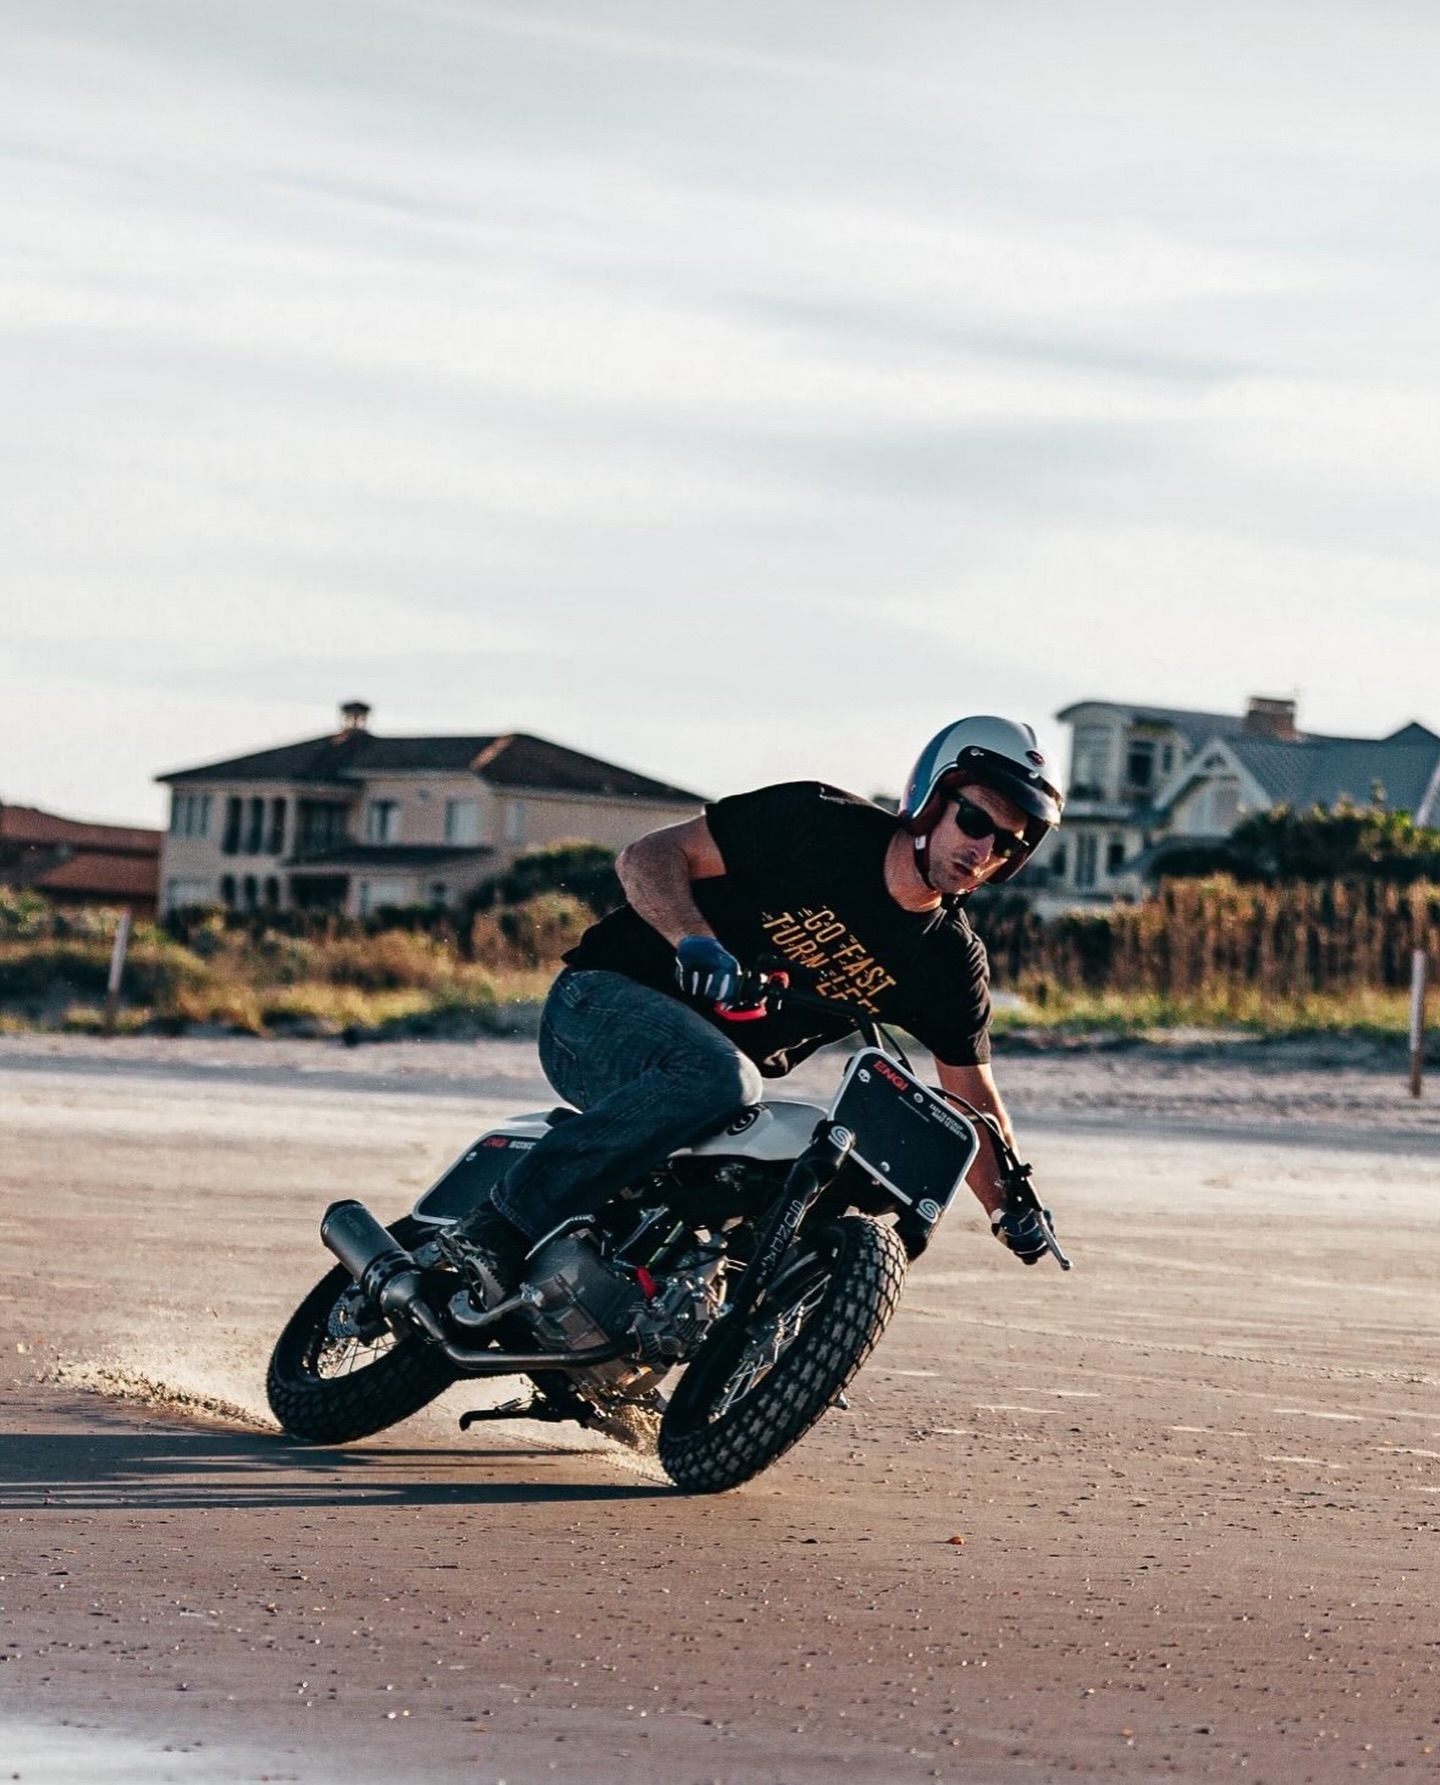 Who’s ever had a ride on the beach? 😍
📸 @theoledru 
—
#sundaymotors #flattrack #moto #motorcycle